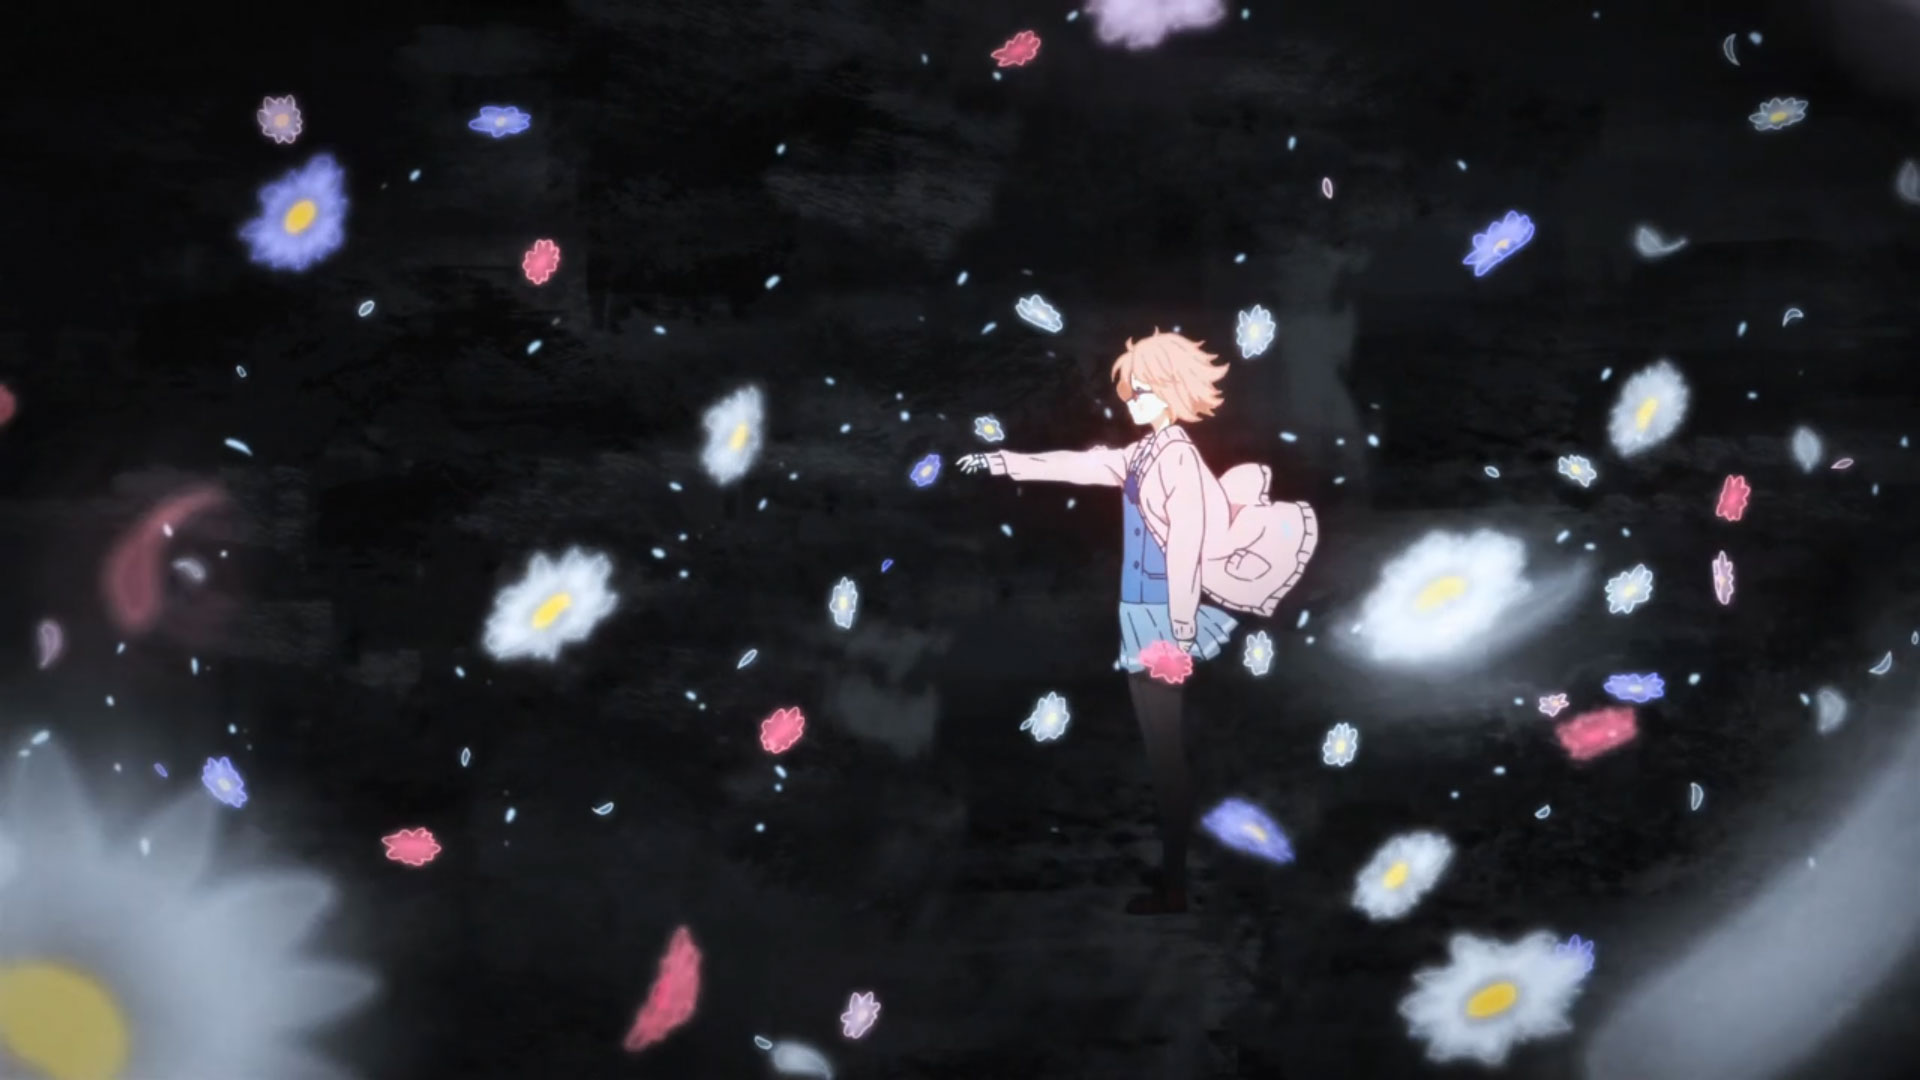 Anime Beyond the Boundary HD Wallpaper